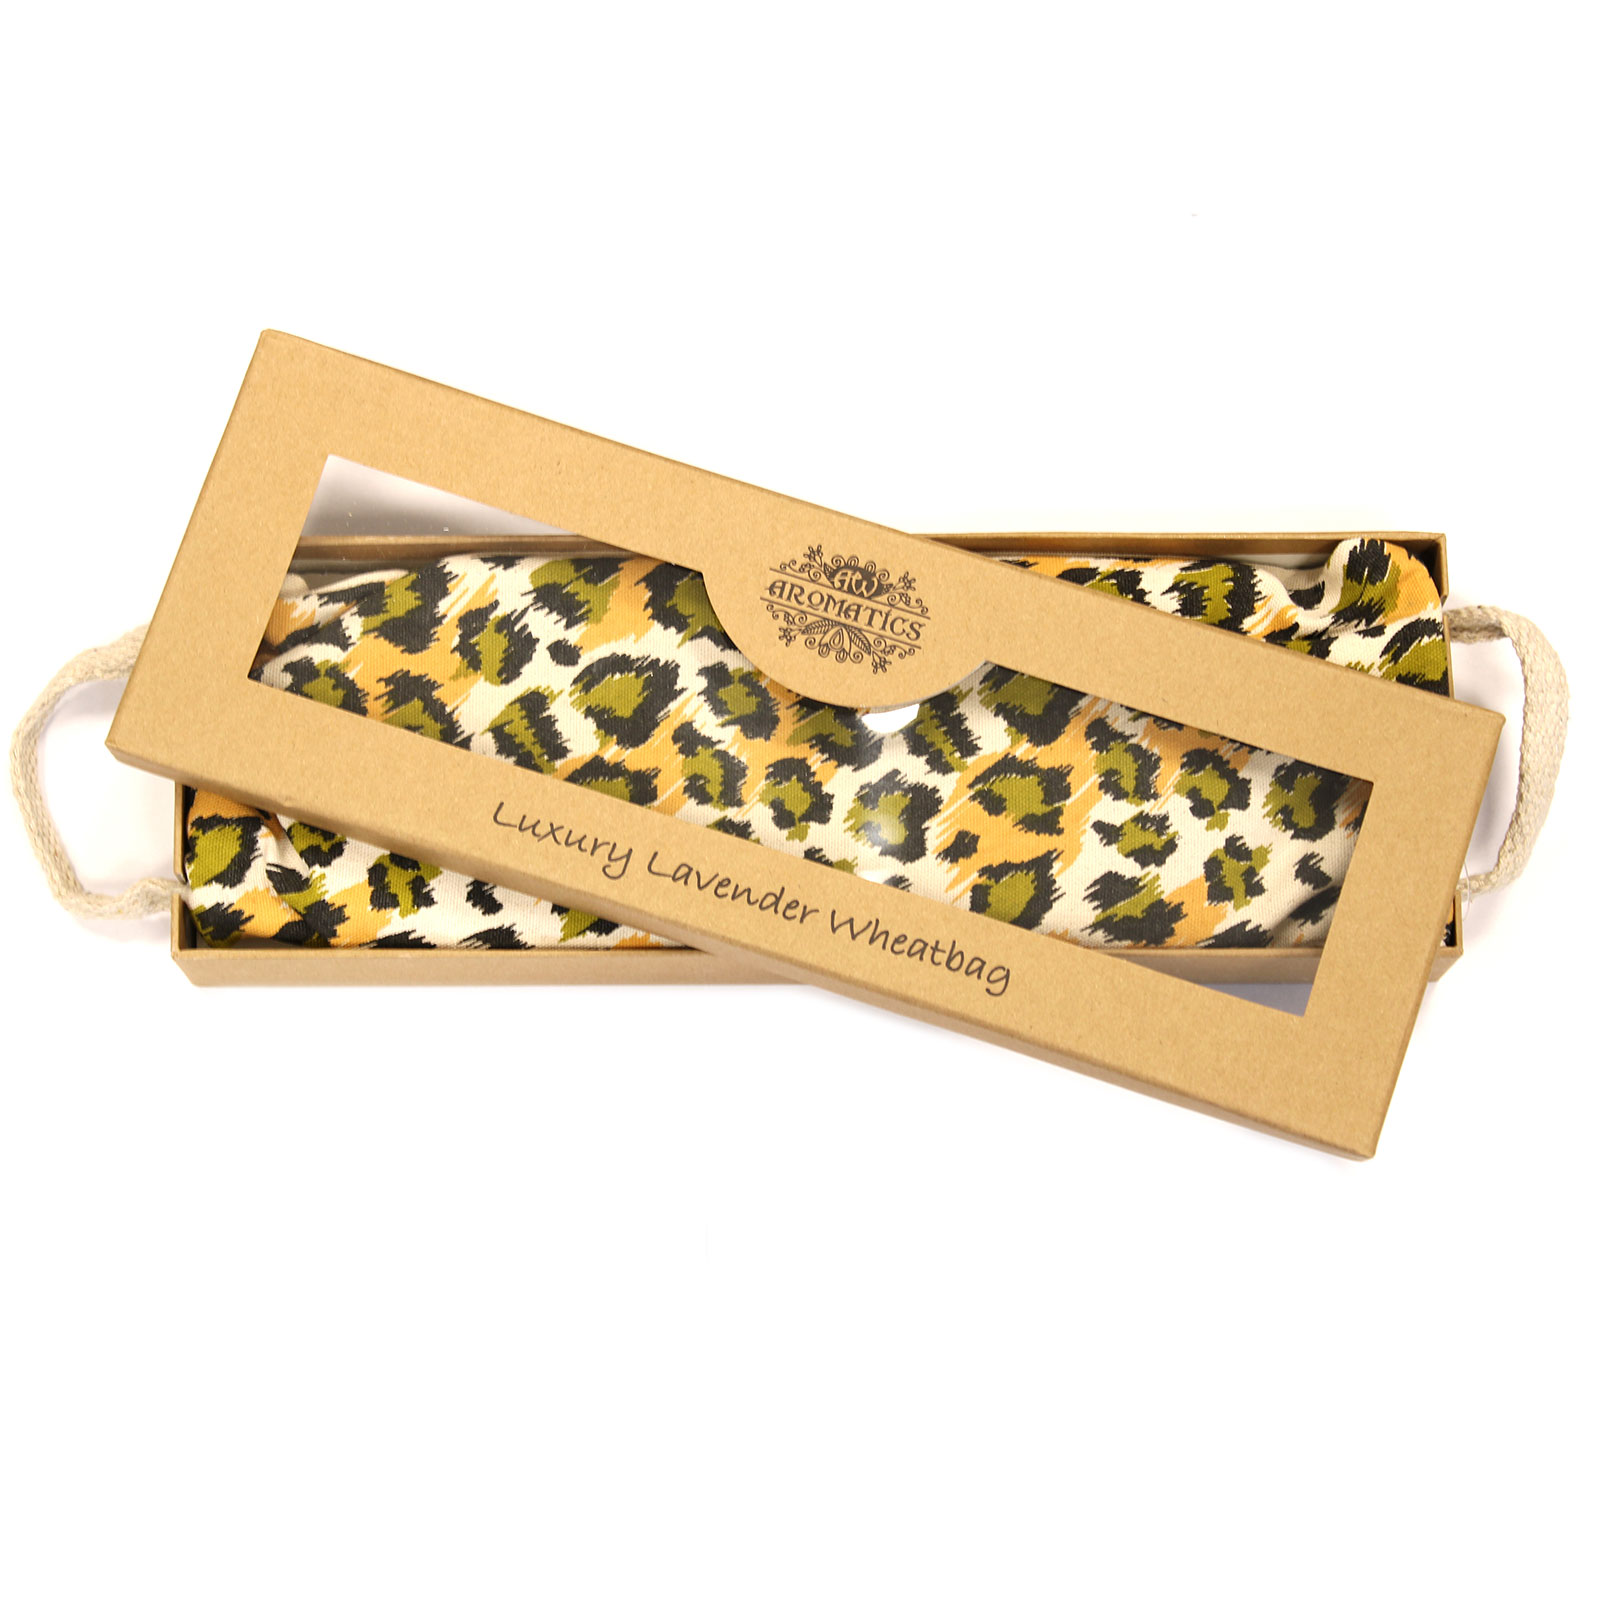 Luxury Lavender Wheat Bag in Gift Box - Night Leopard